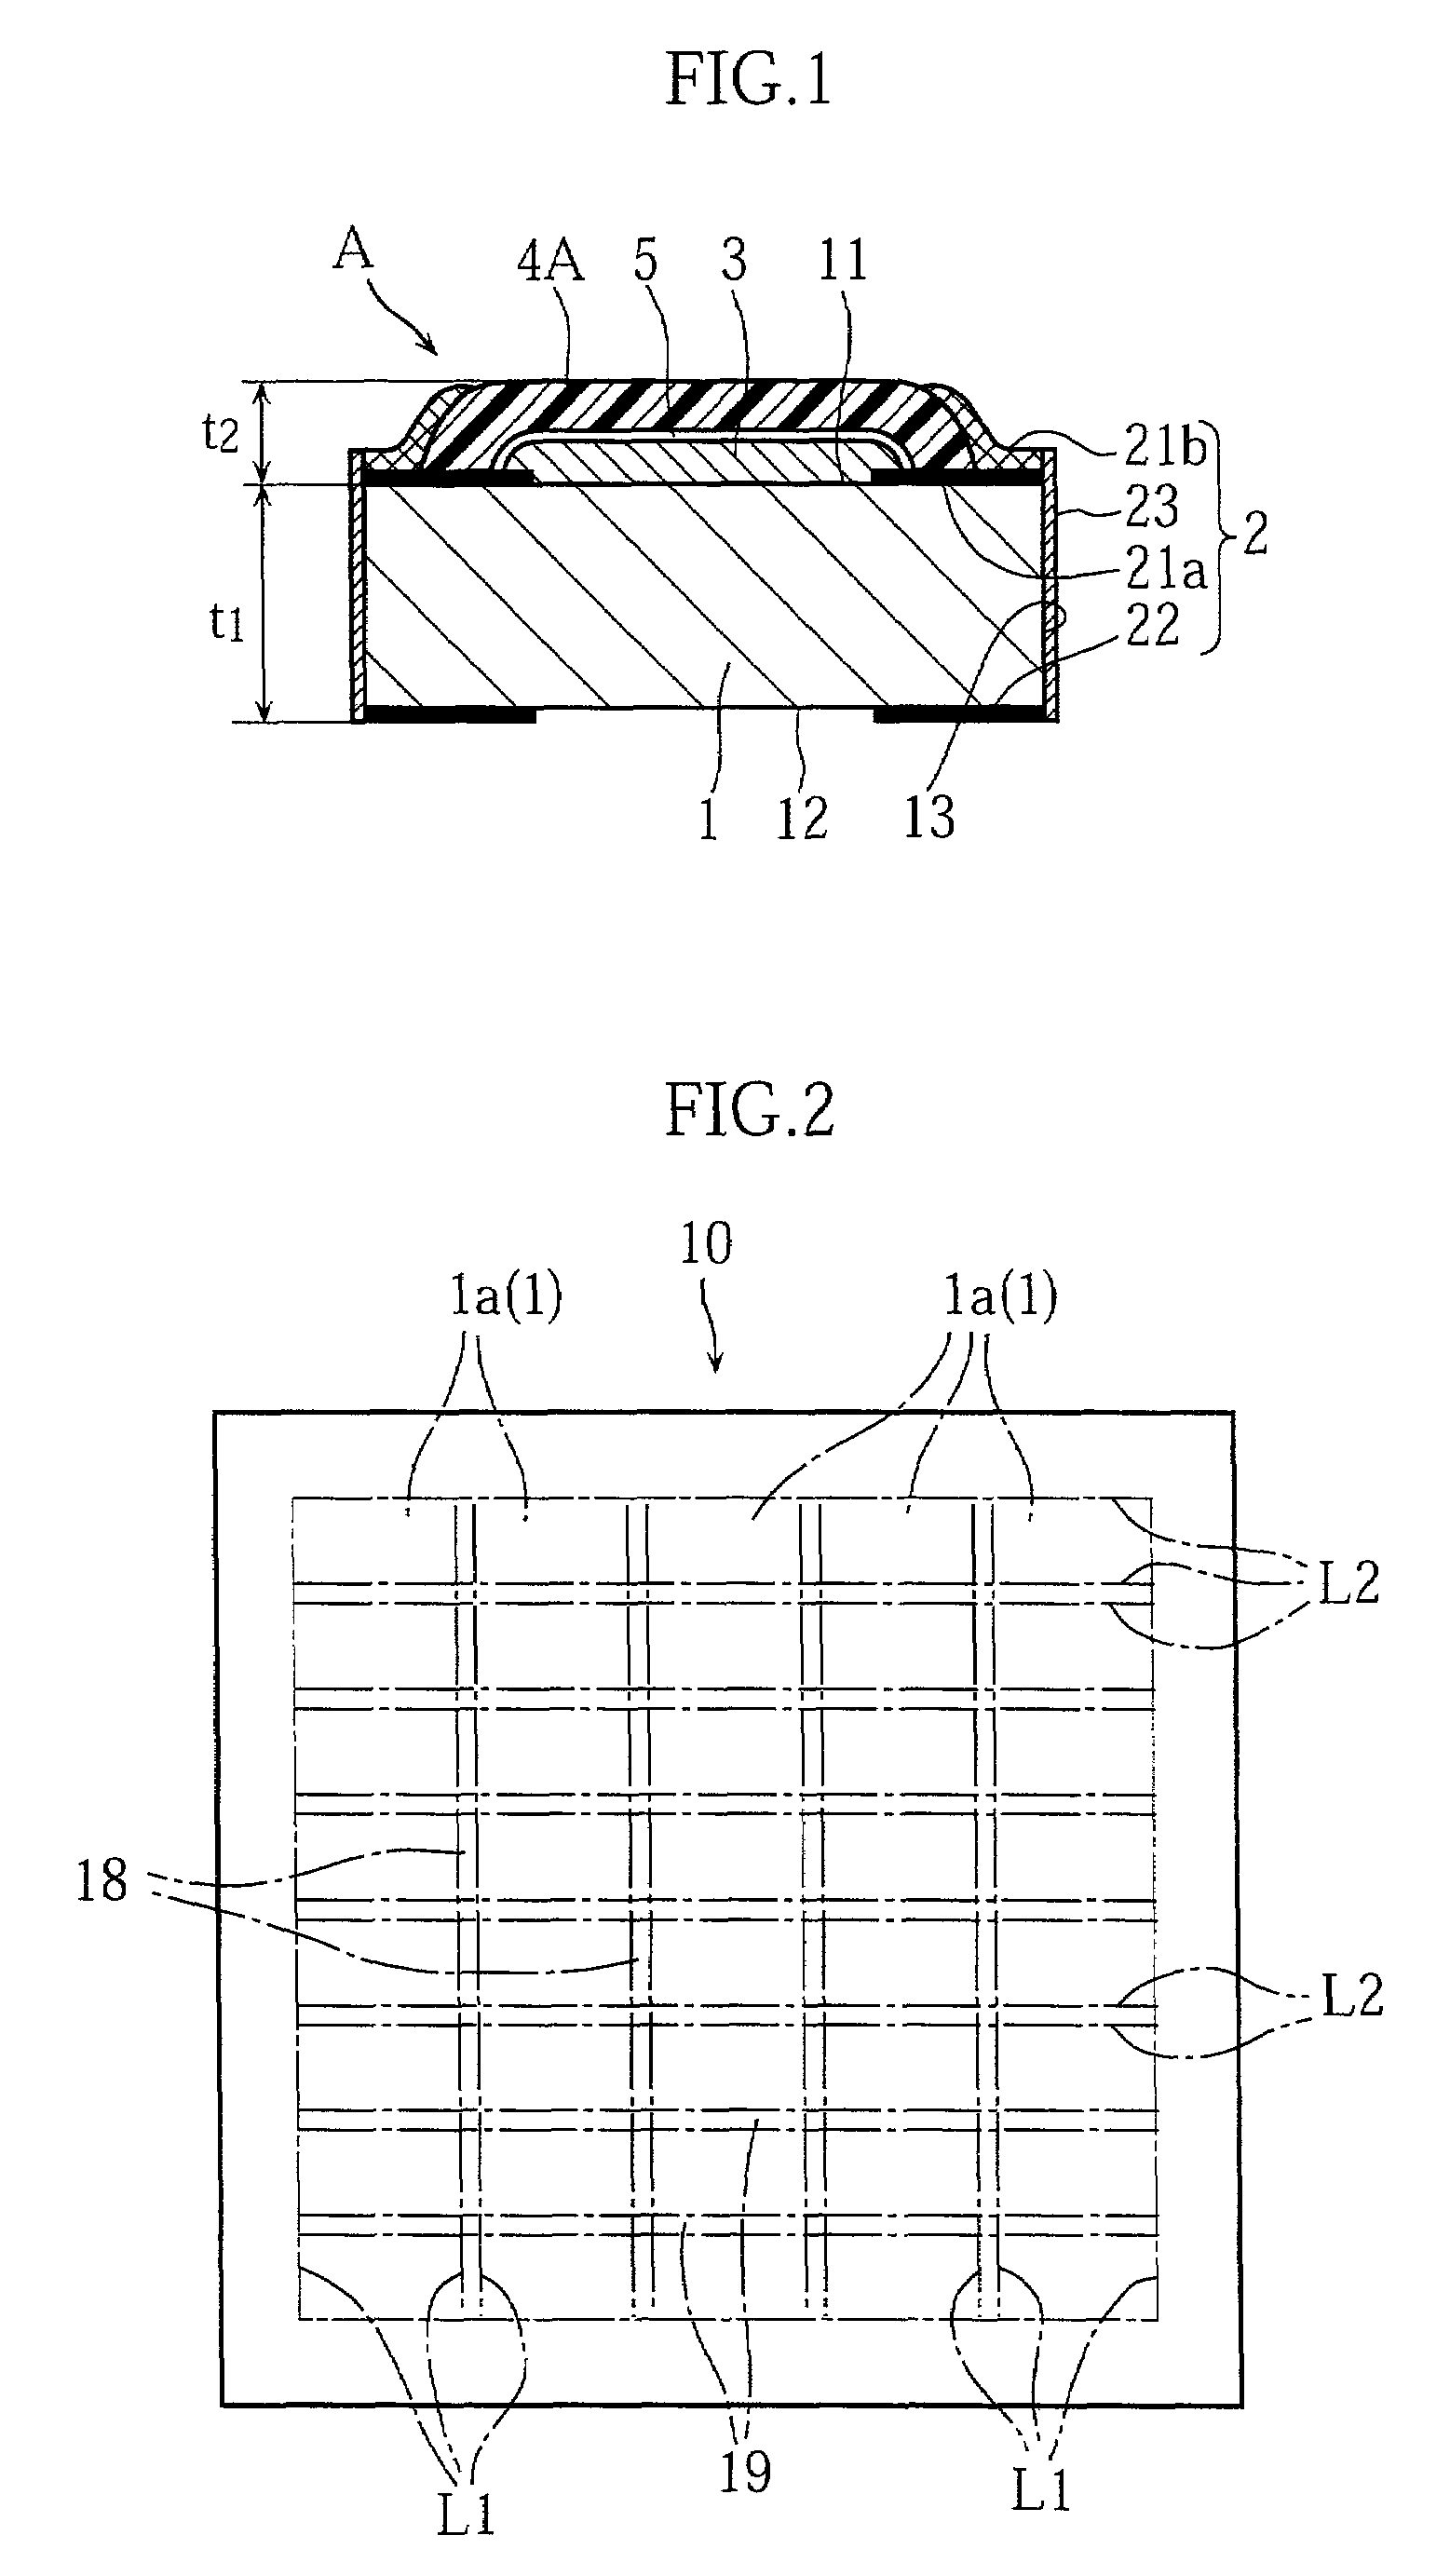 Chip resistor fabrication method